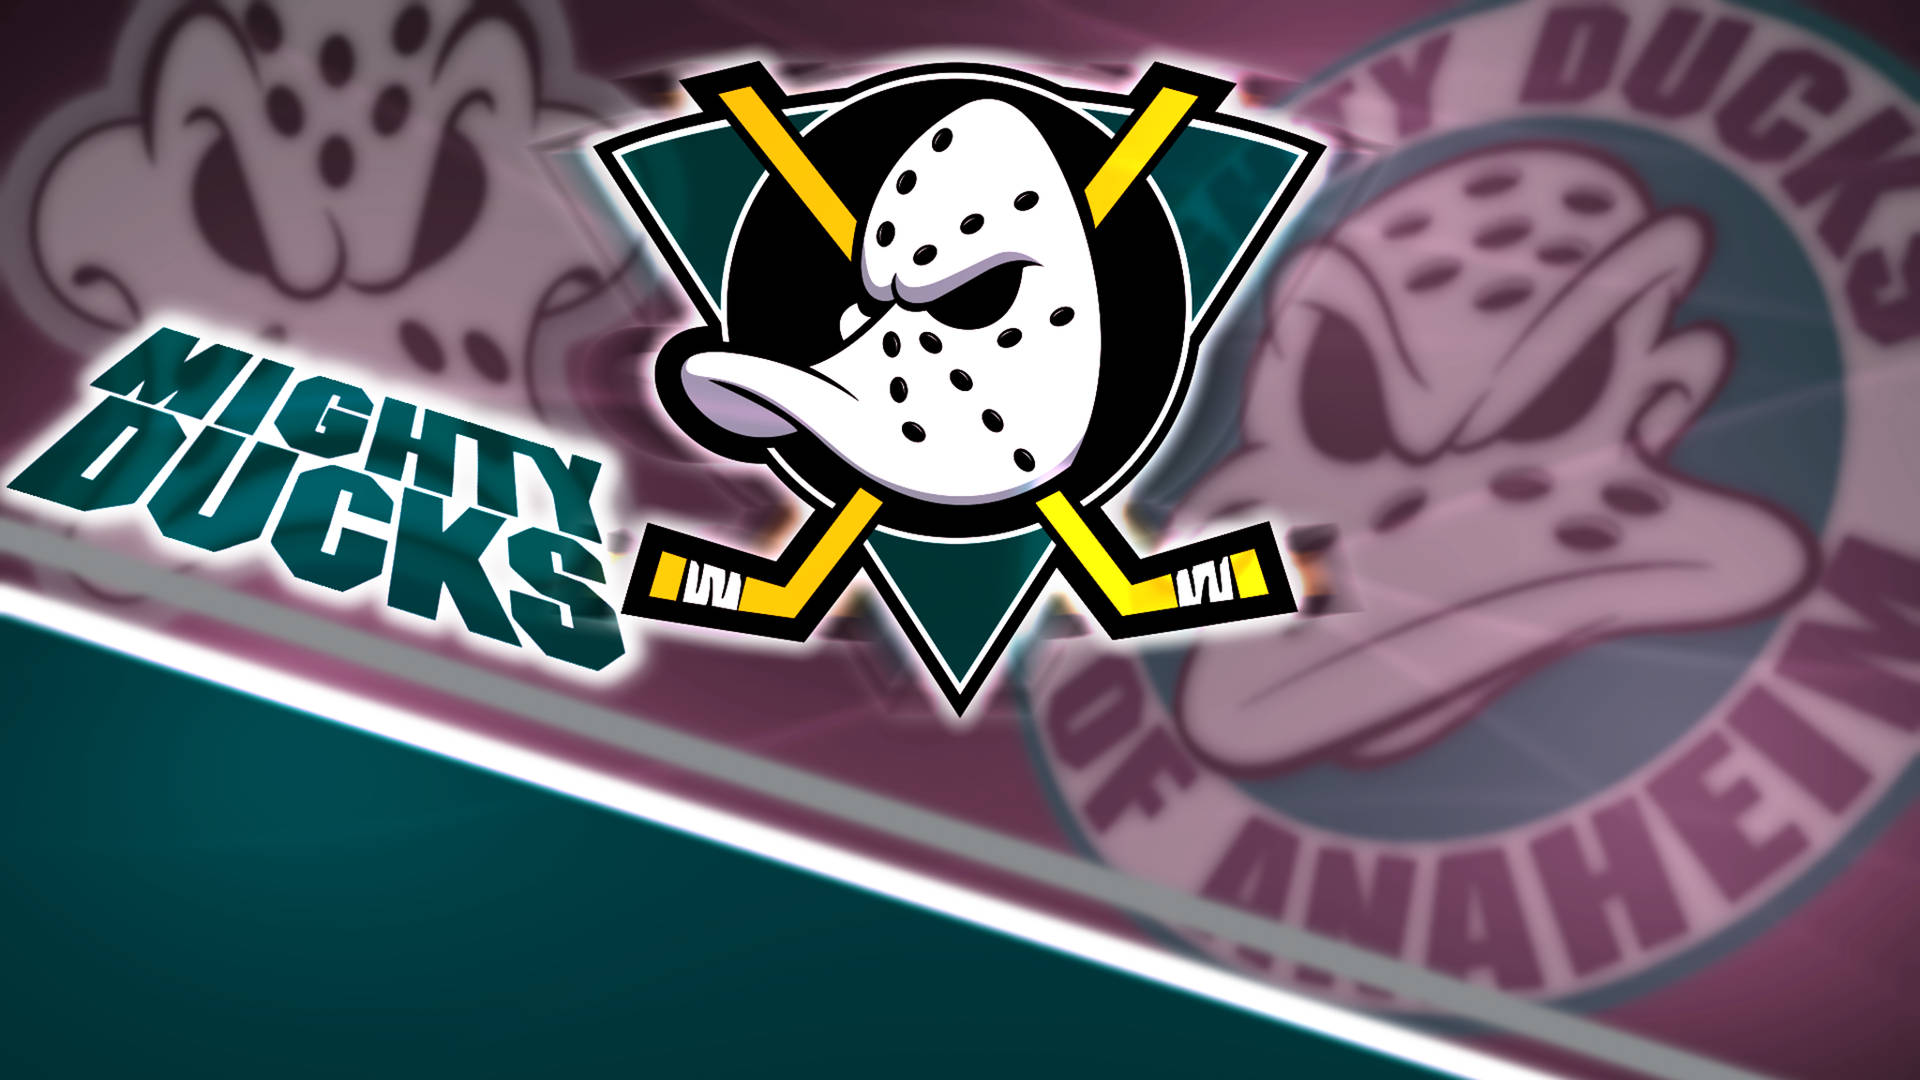 Anaheim Ducks Classic Logos Background